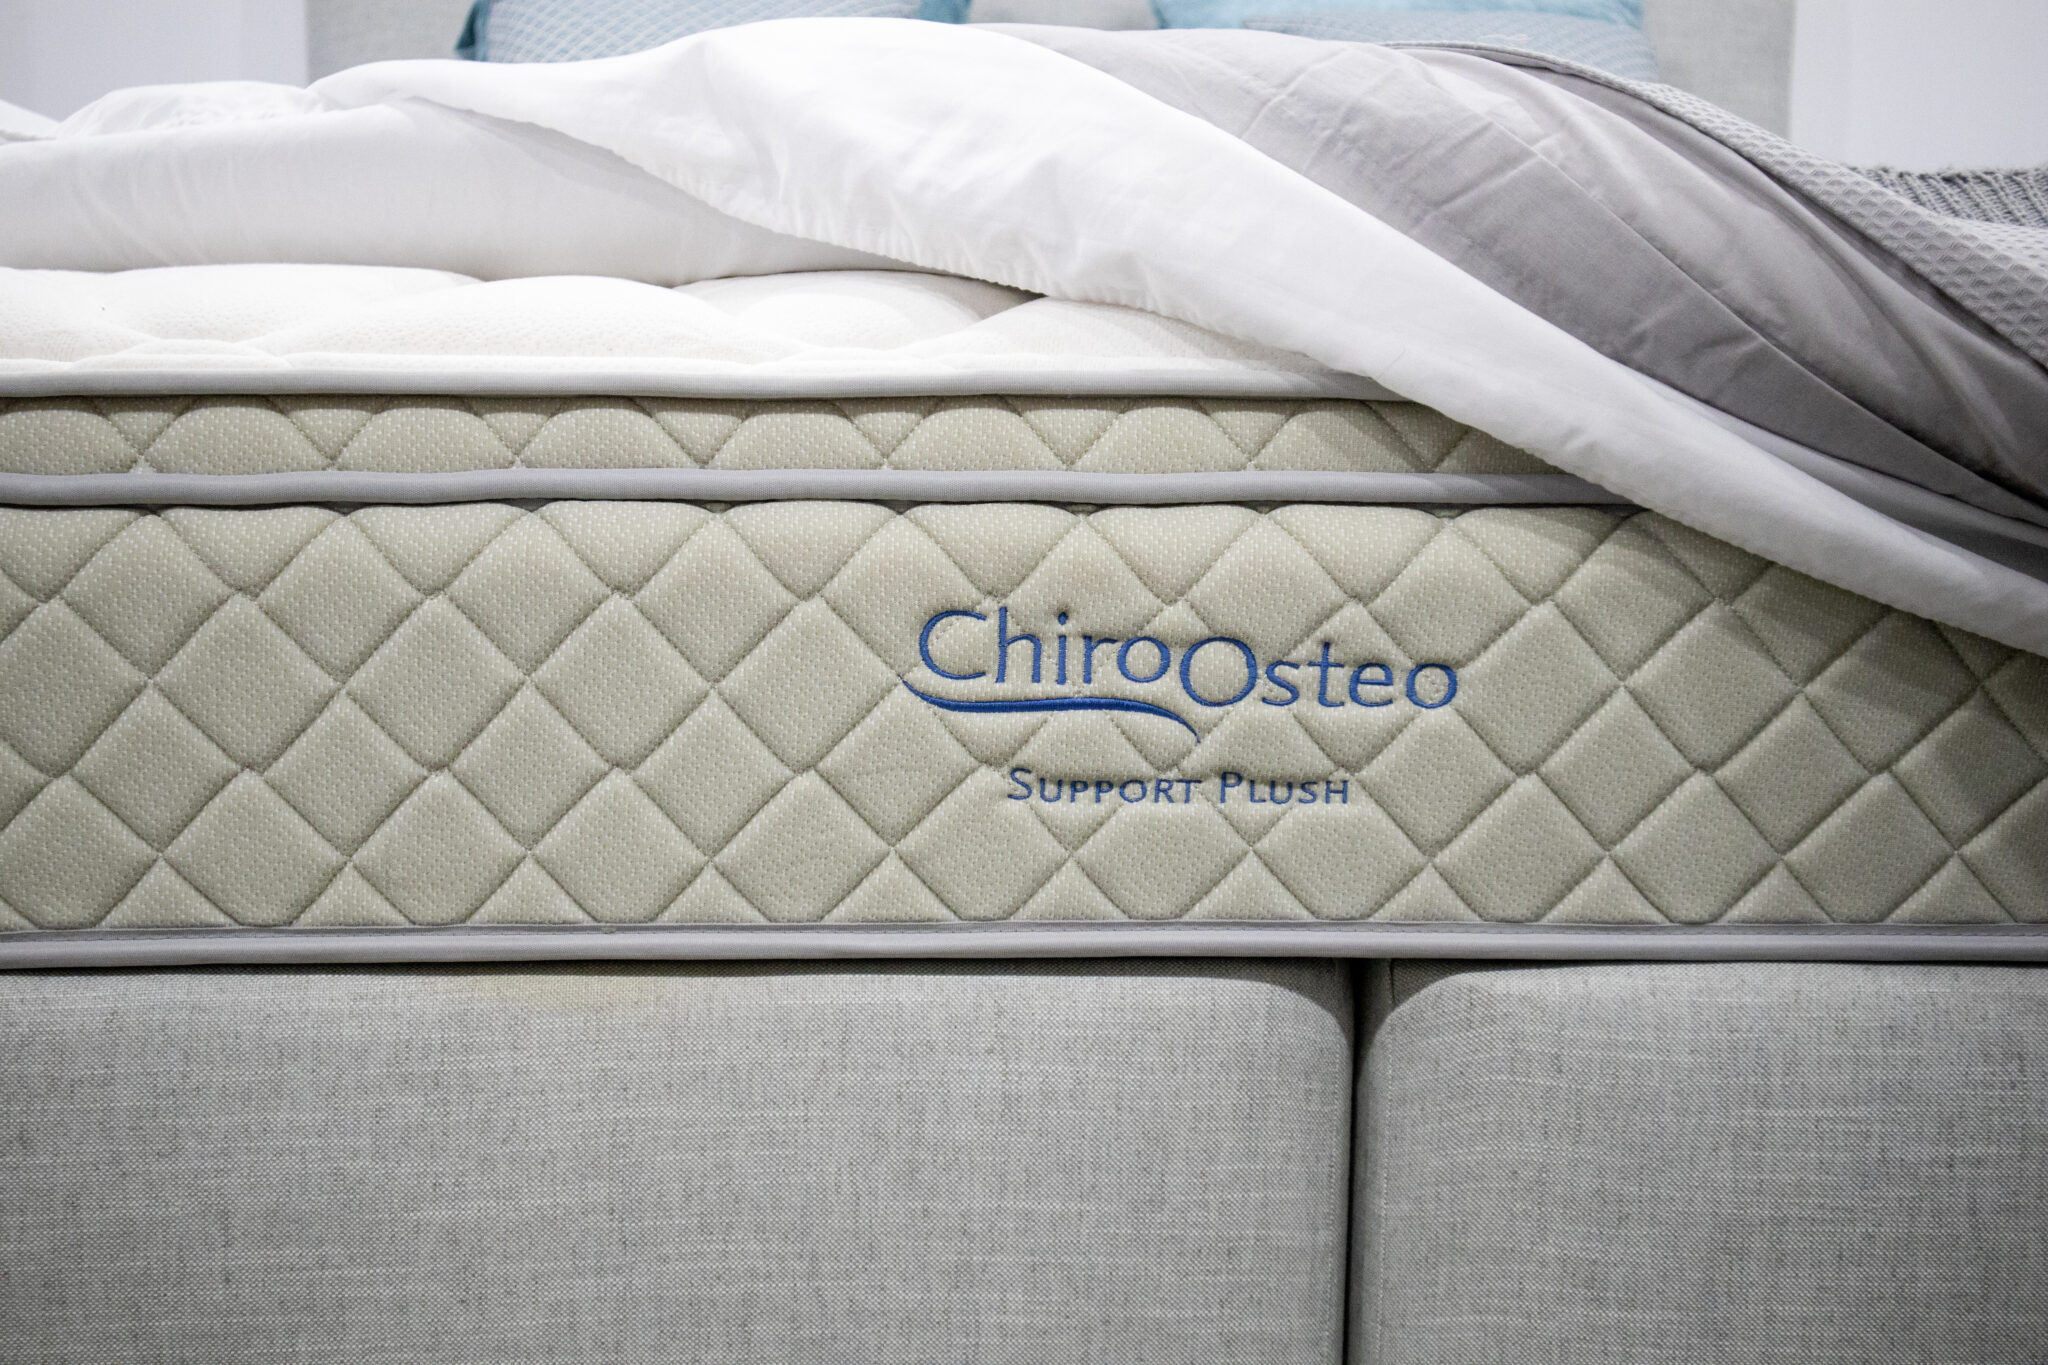 chiro osteo support plush mattress review